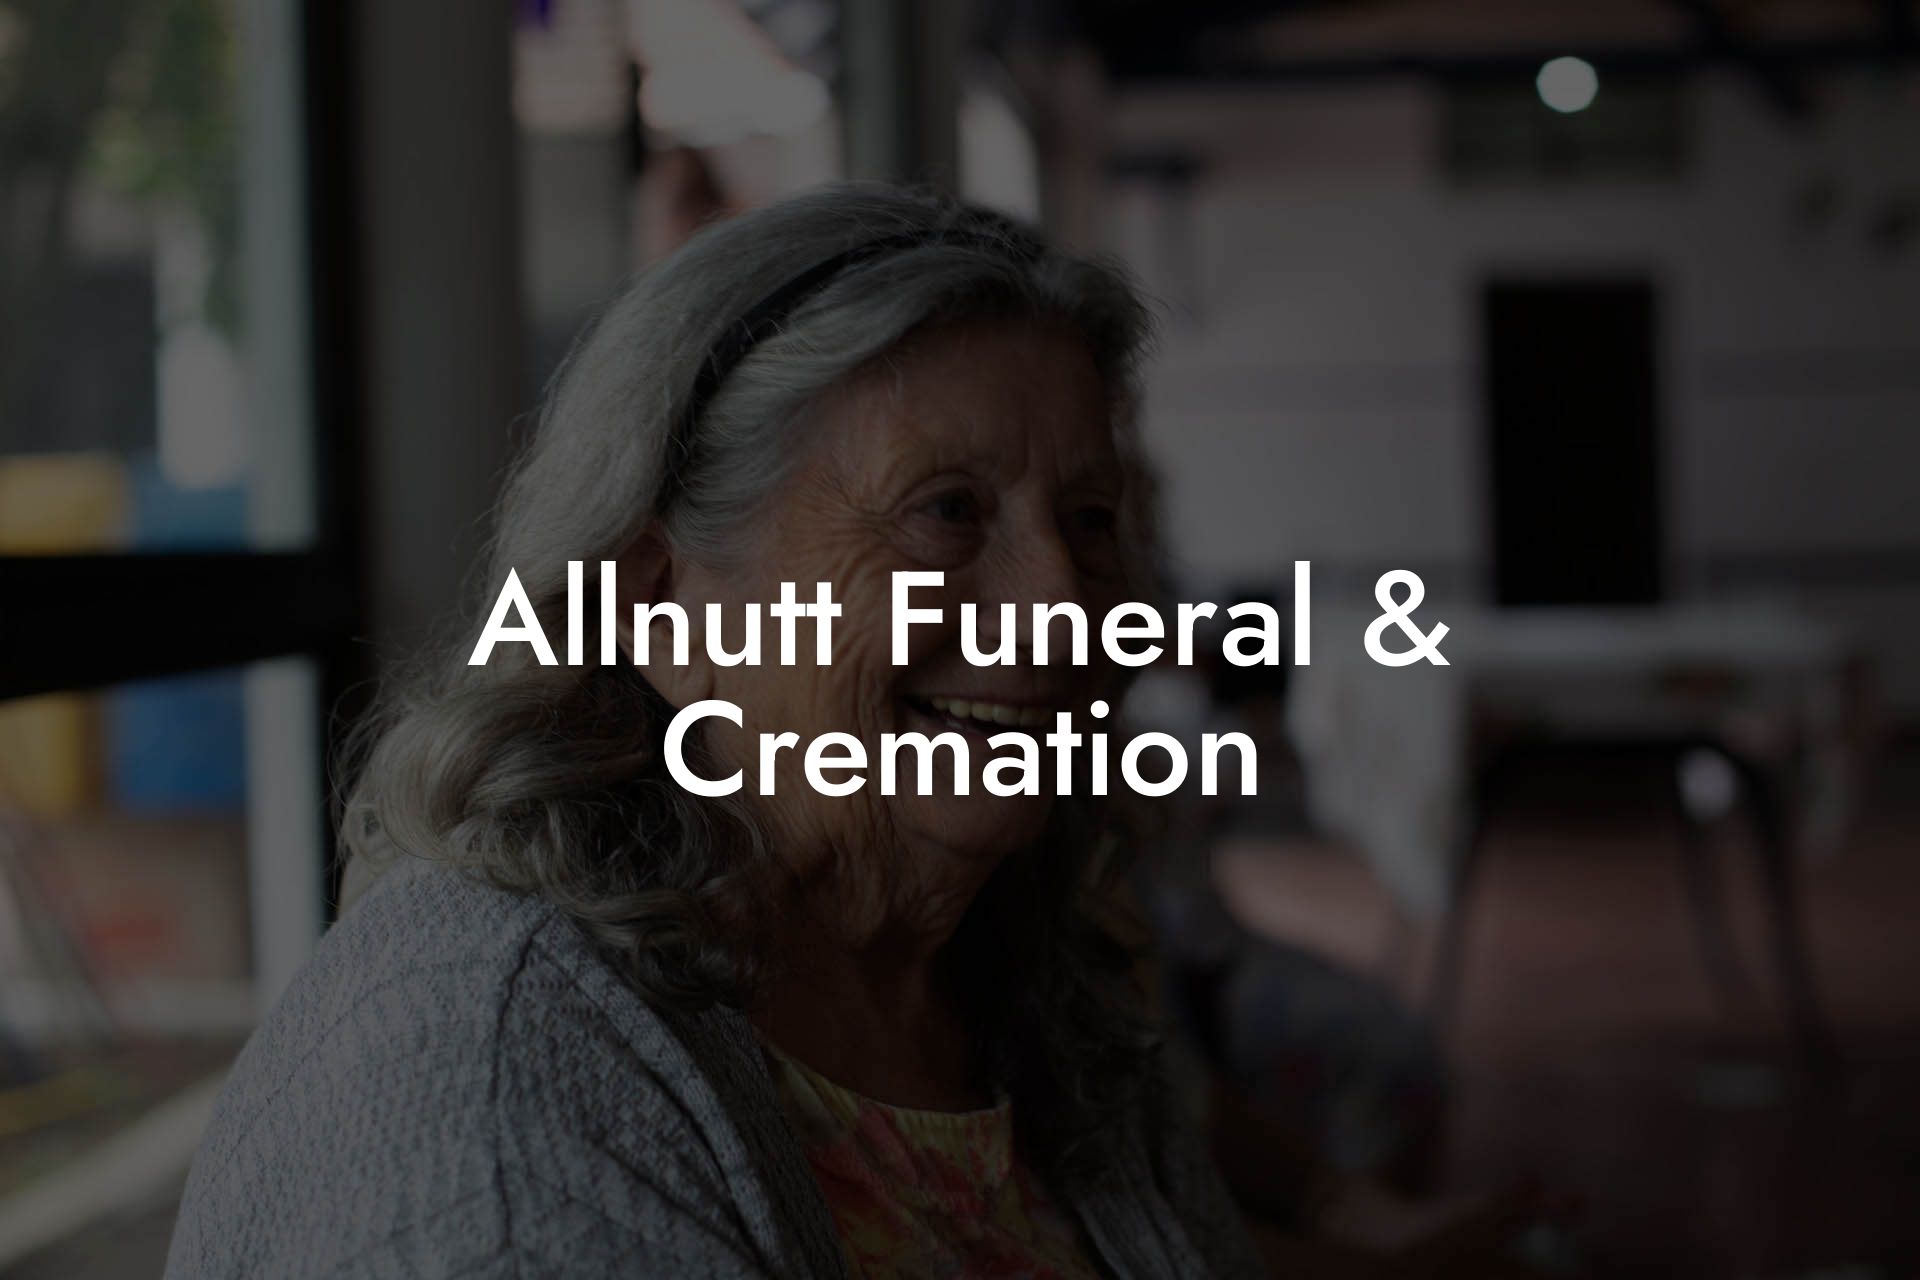 Allnutt Funeral & Cremation